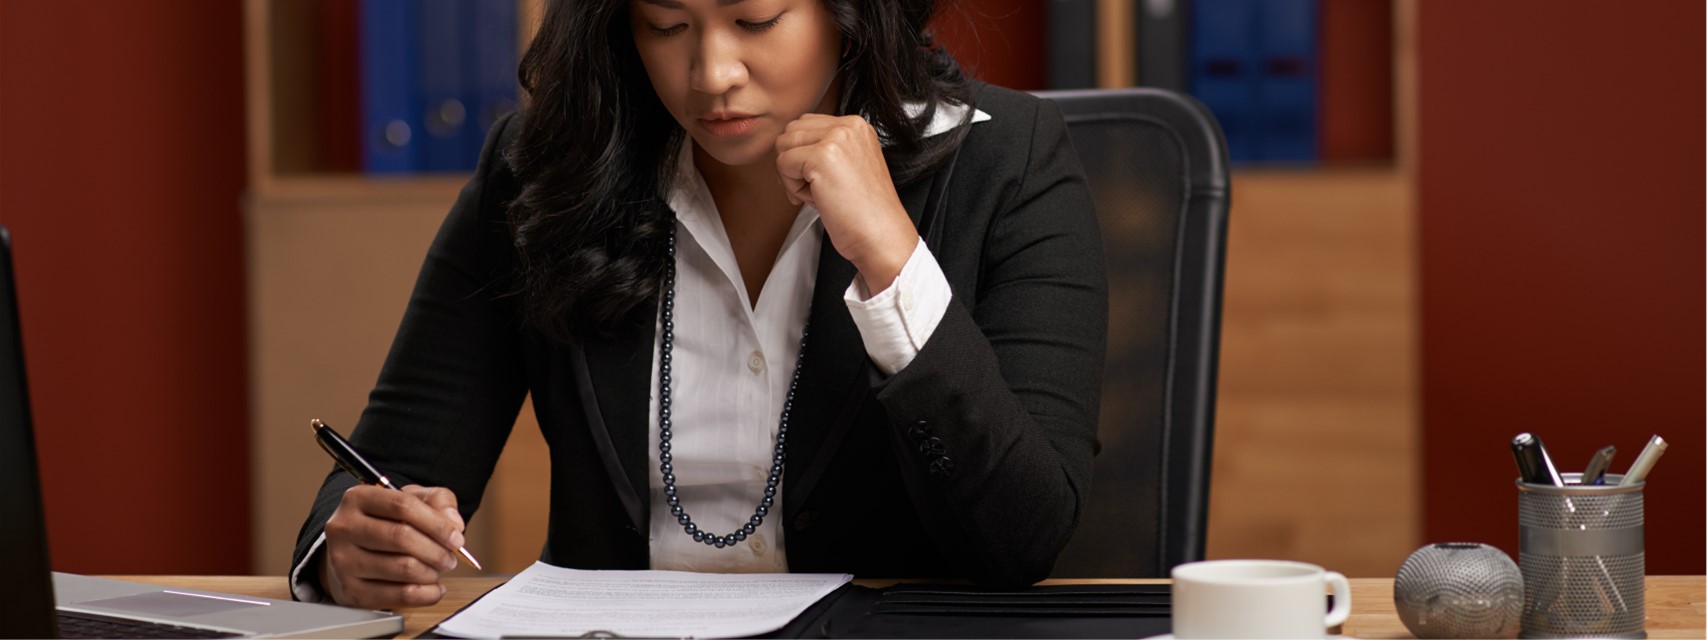 woman reviewing executive compensation disclosures